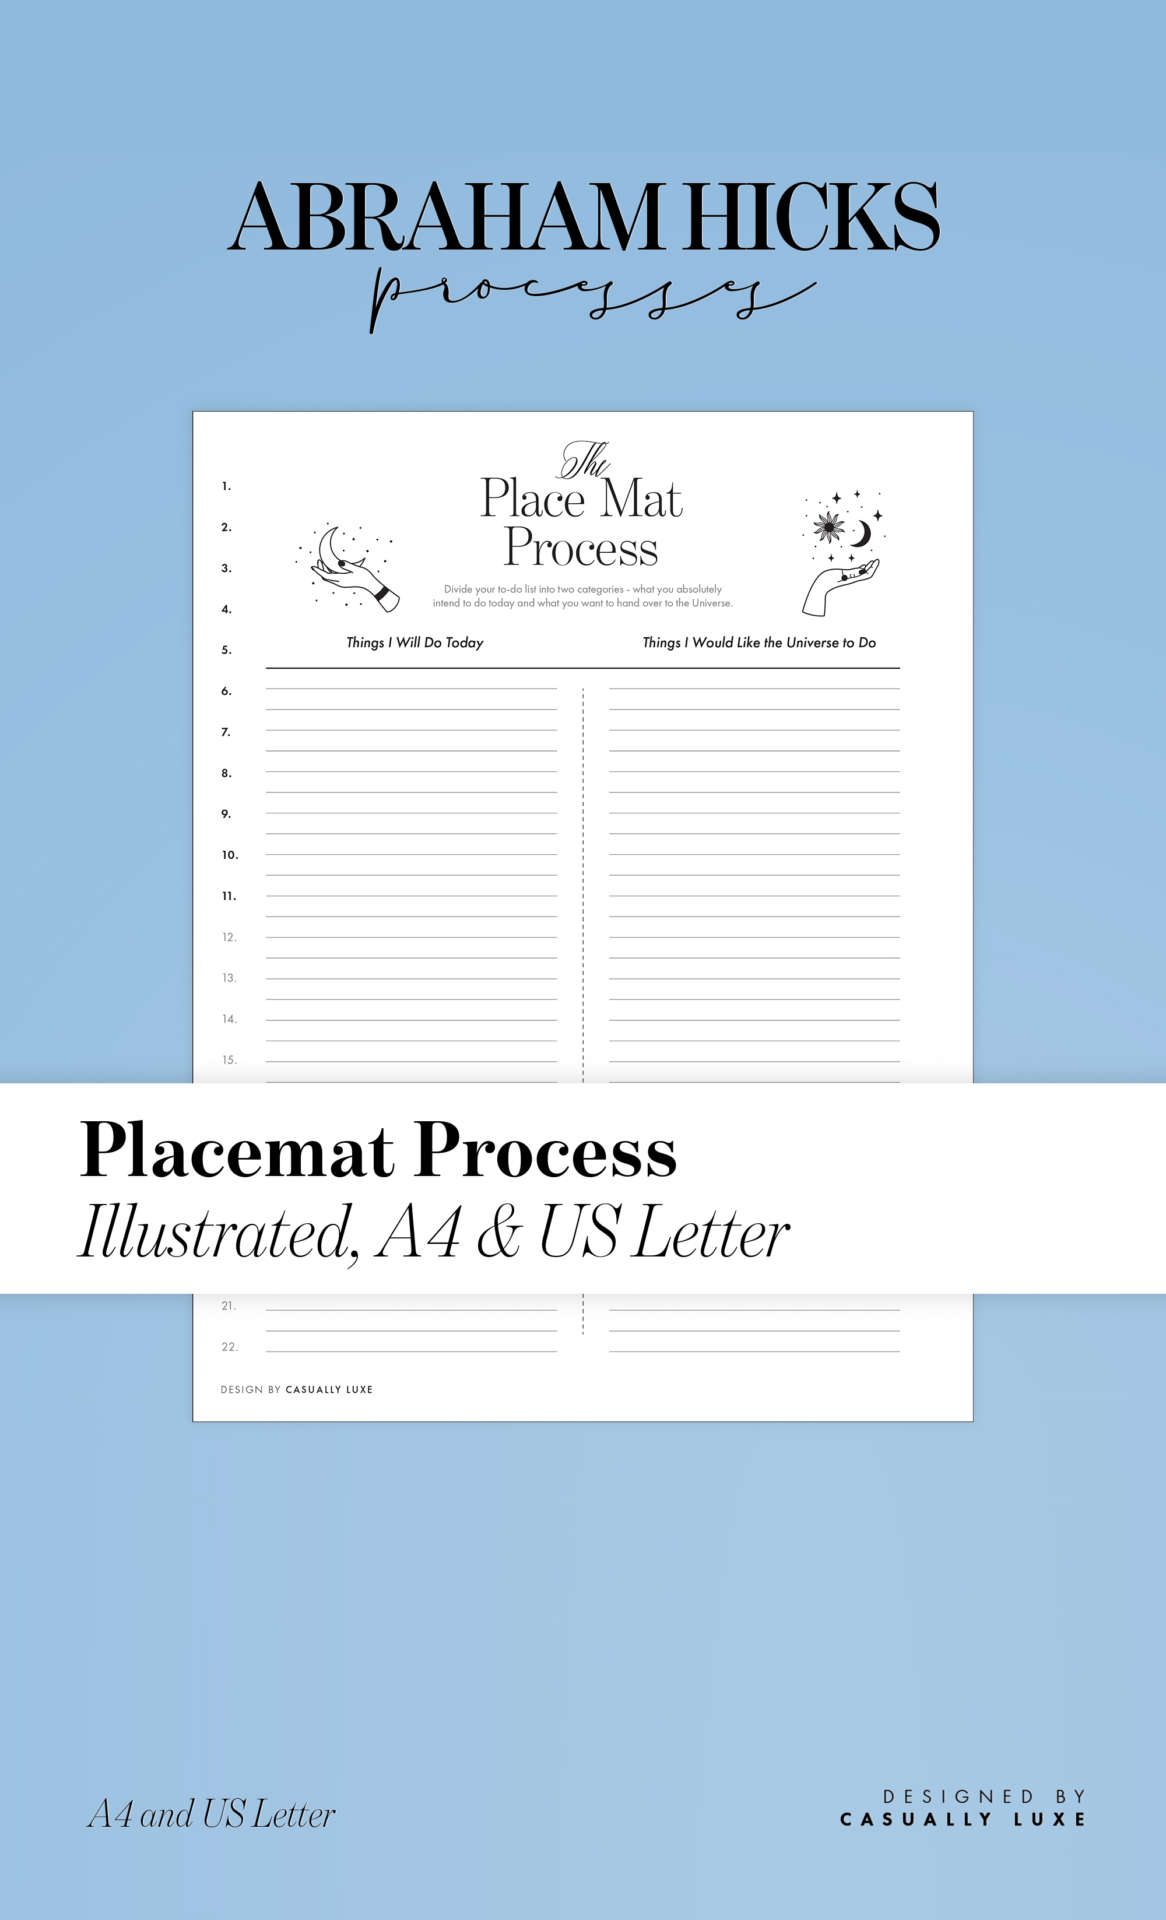 Abraham Hicks Processes for Manifestation - Placemat Process